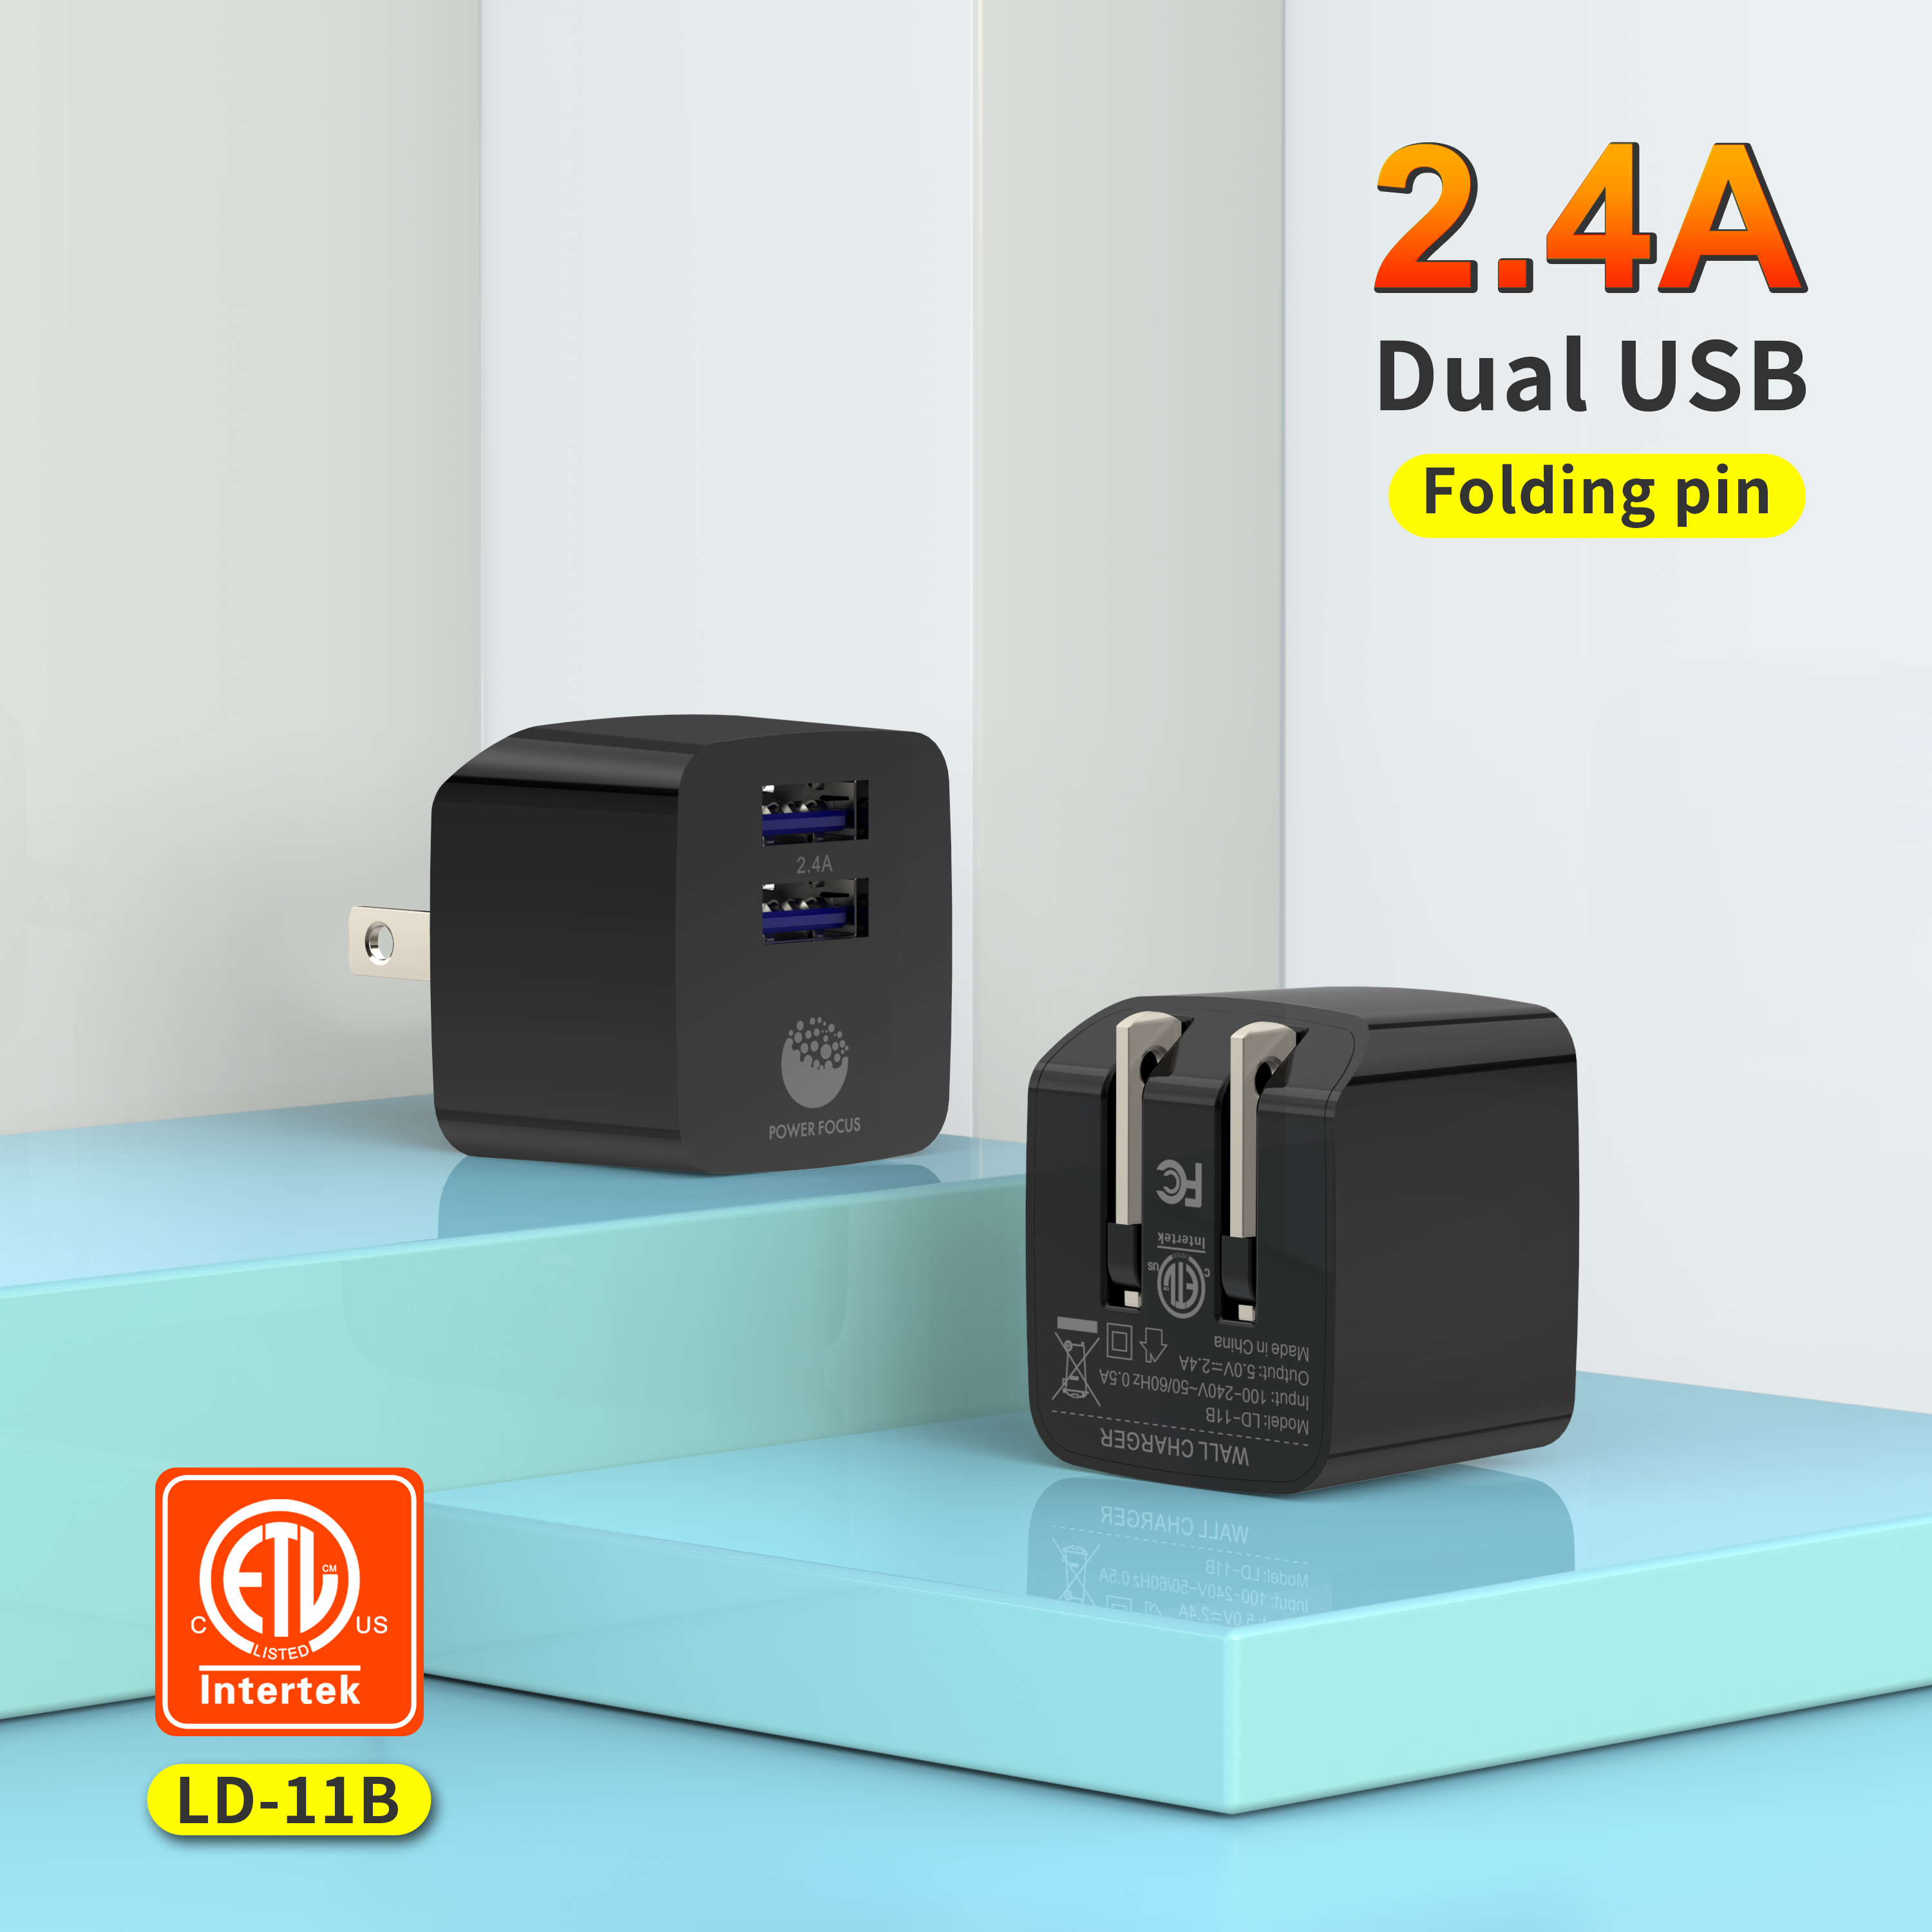 Dual USB folding plug Manufacturers, Dual USB folding plug Factory, Supply Dual USB folding plug